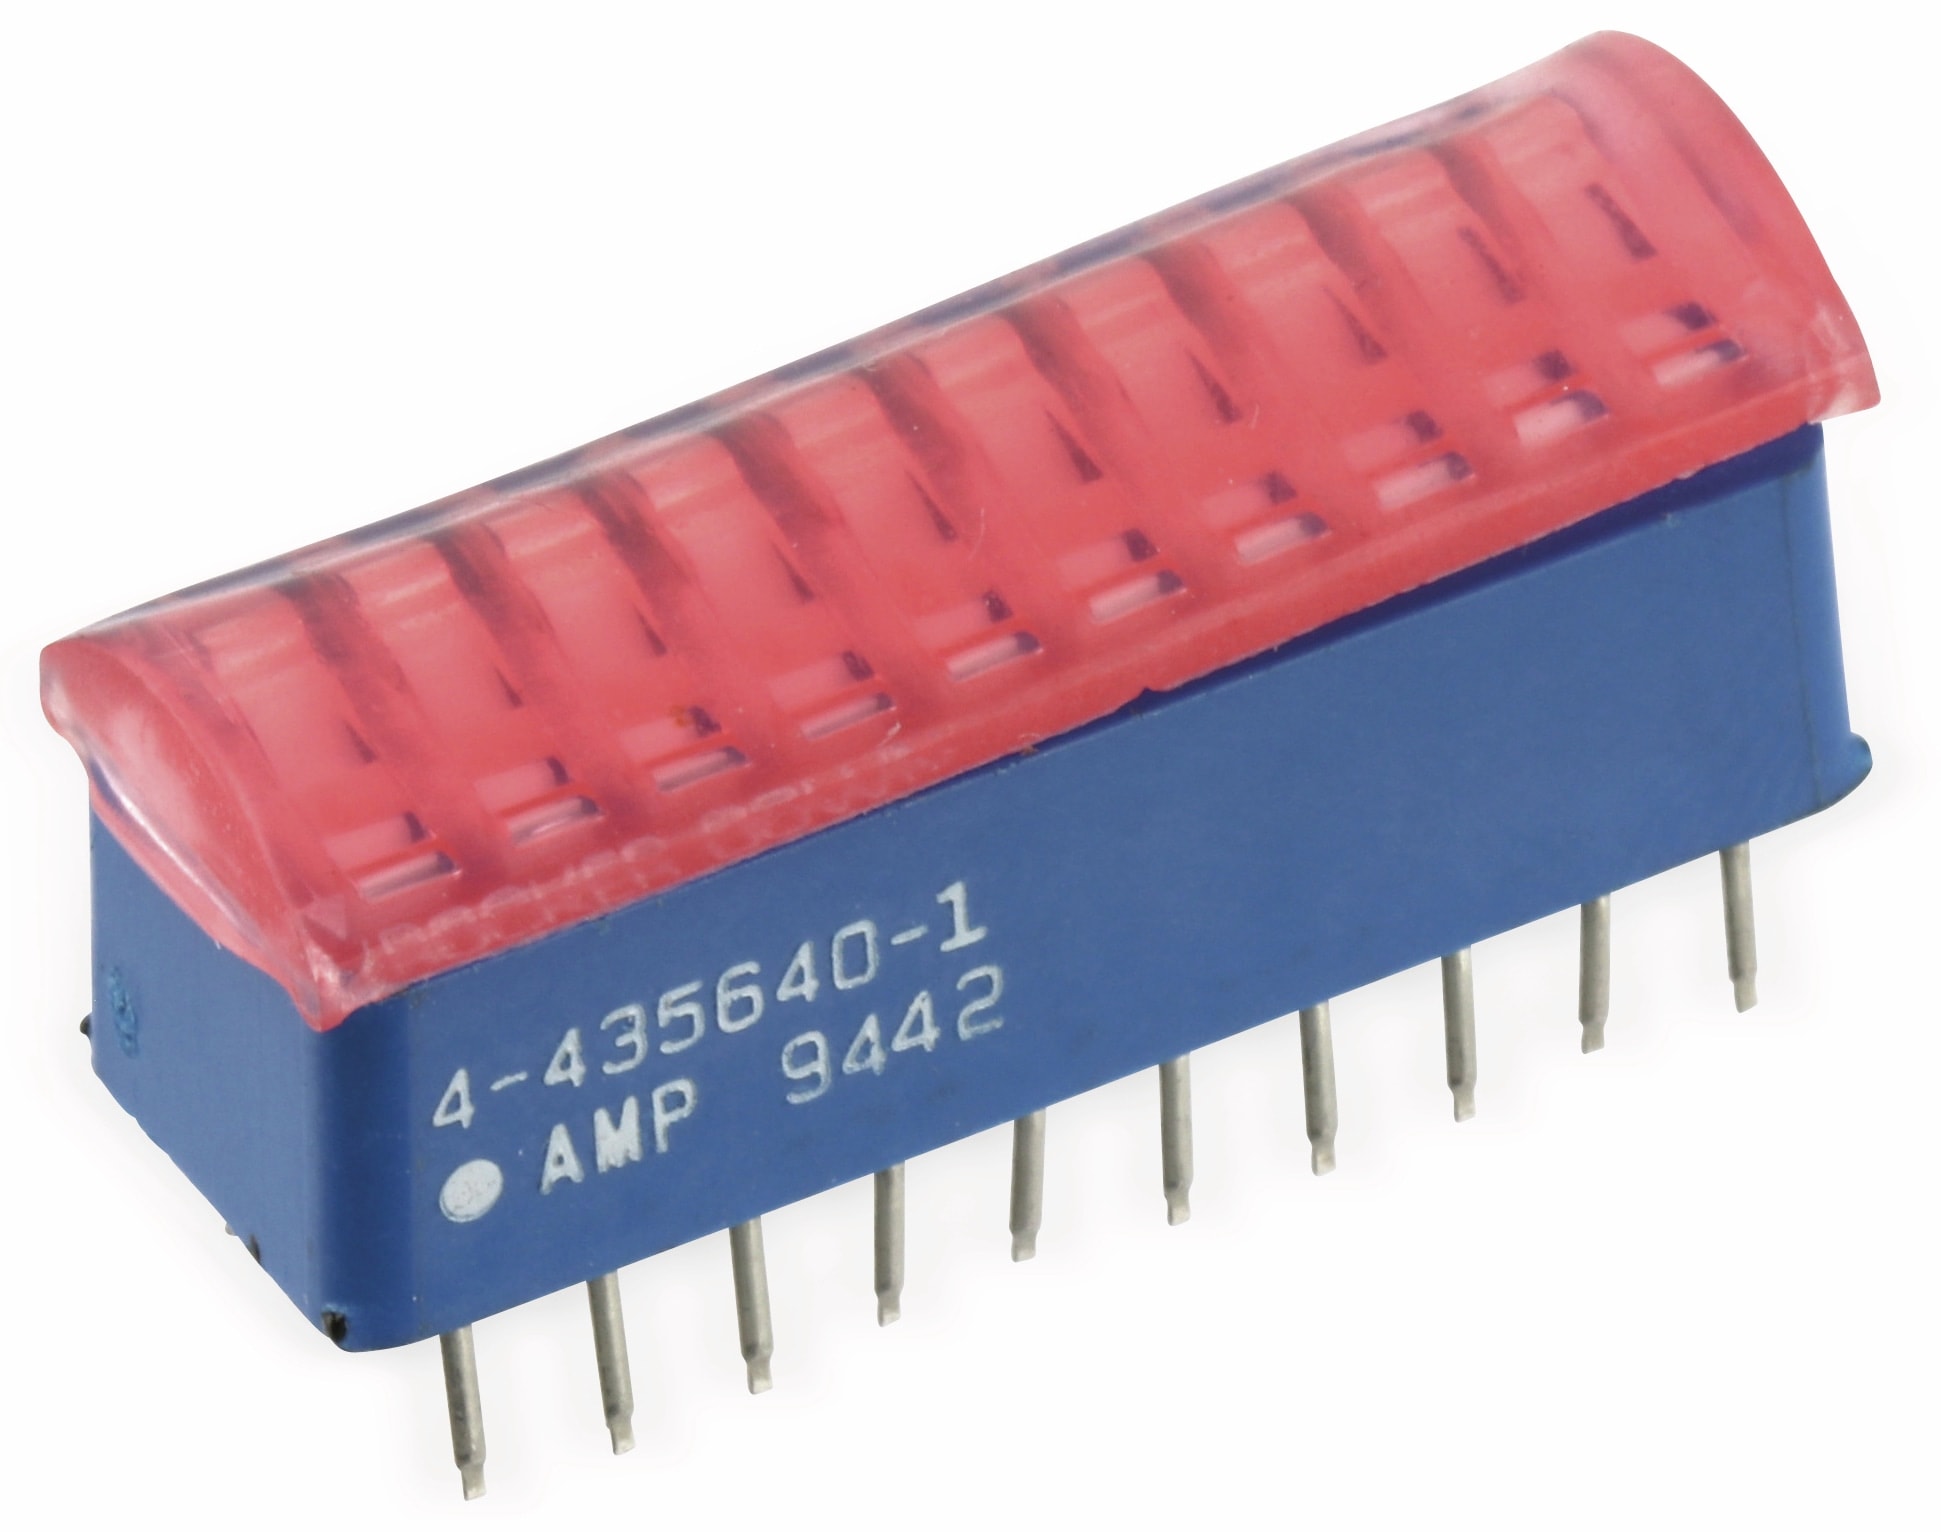 DIP-Schalter AMP 4-435640-1, 10-polig